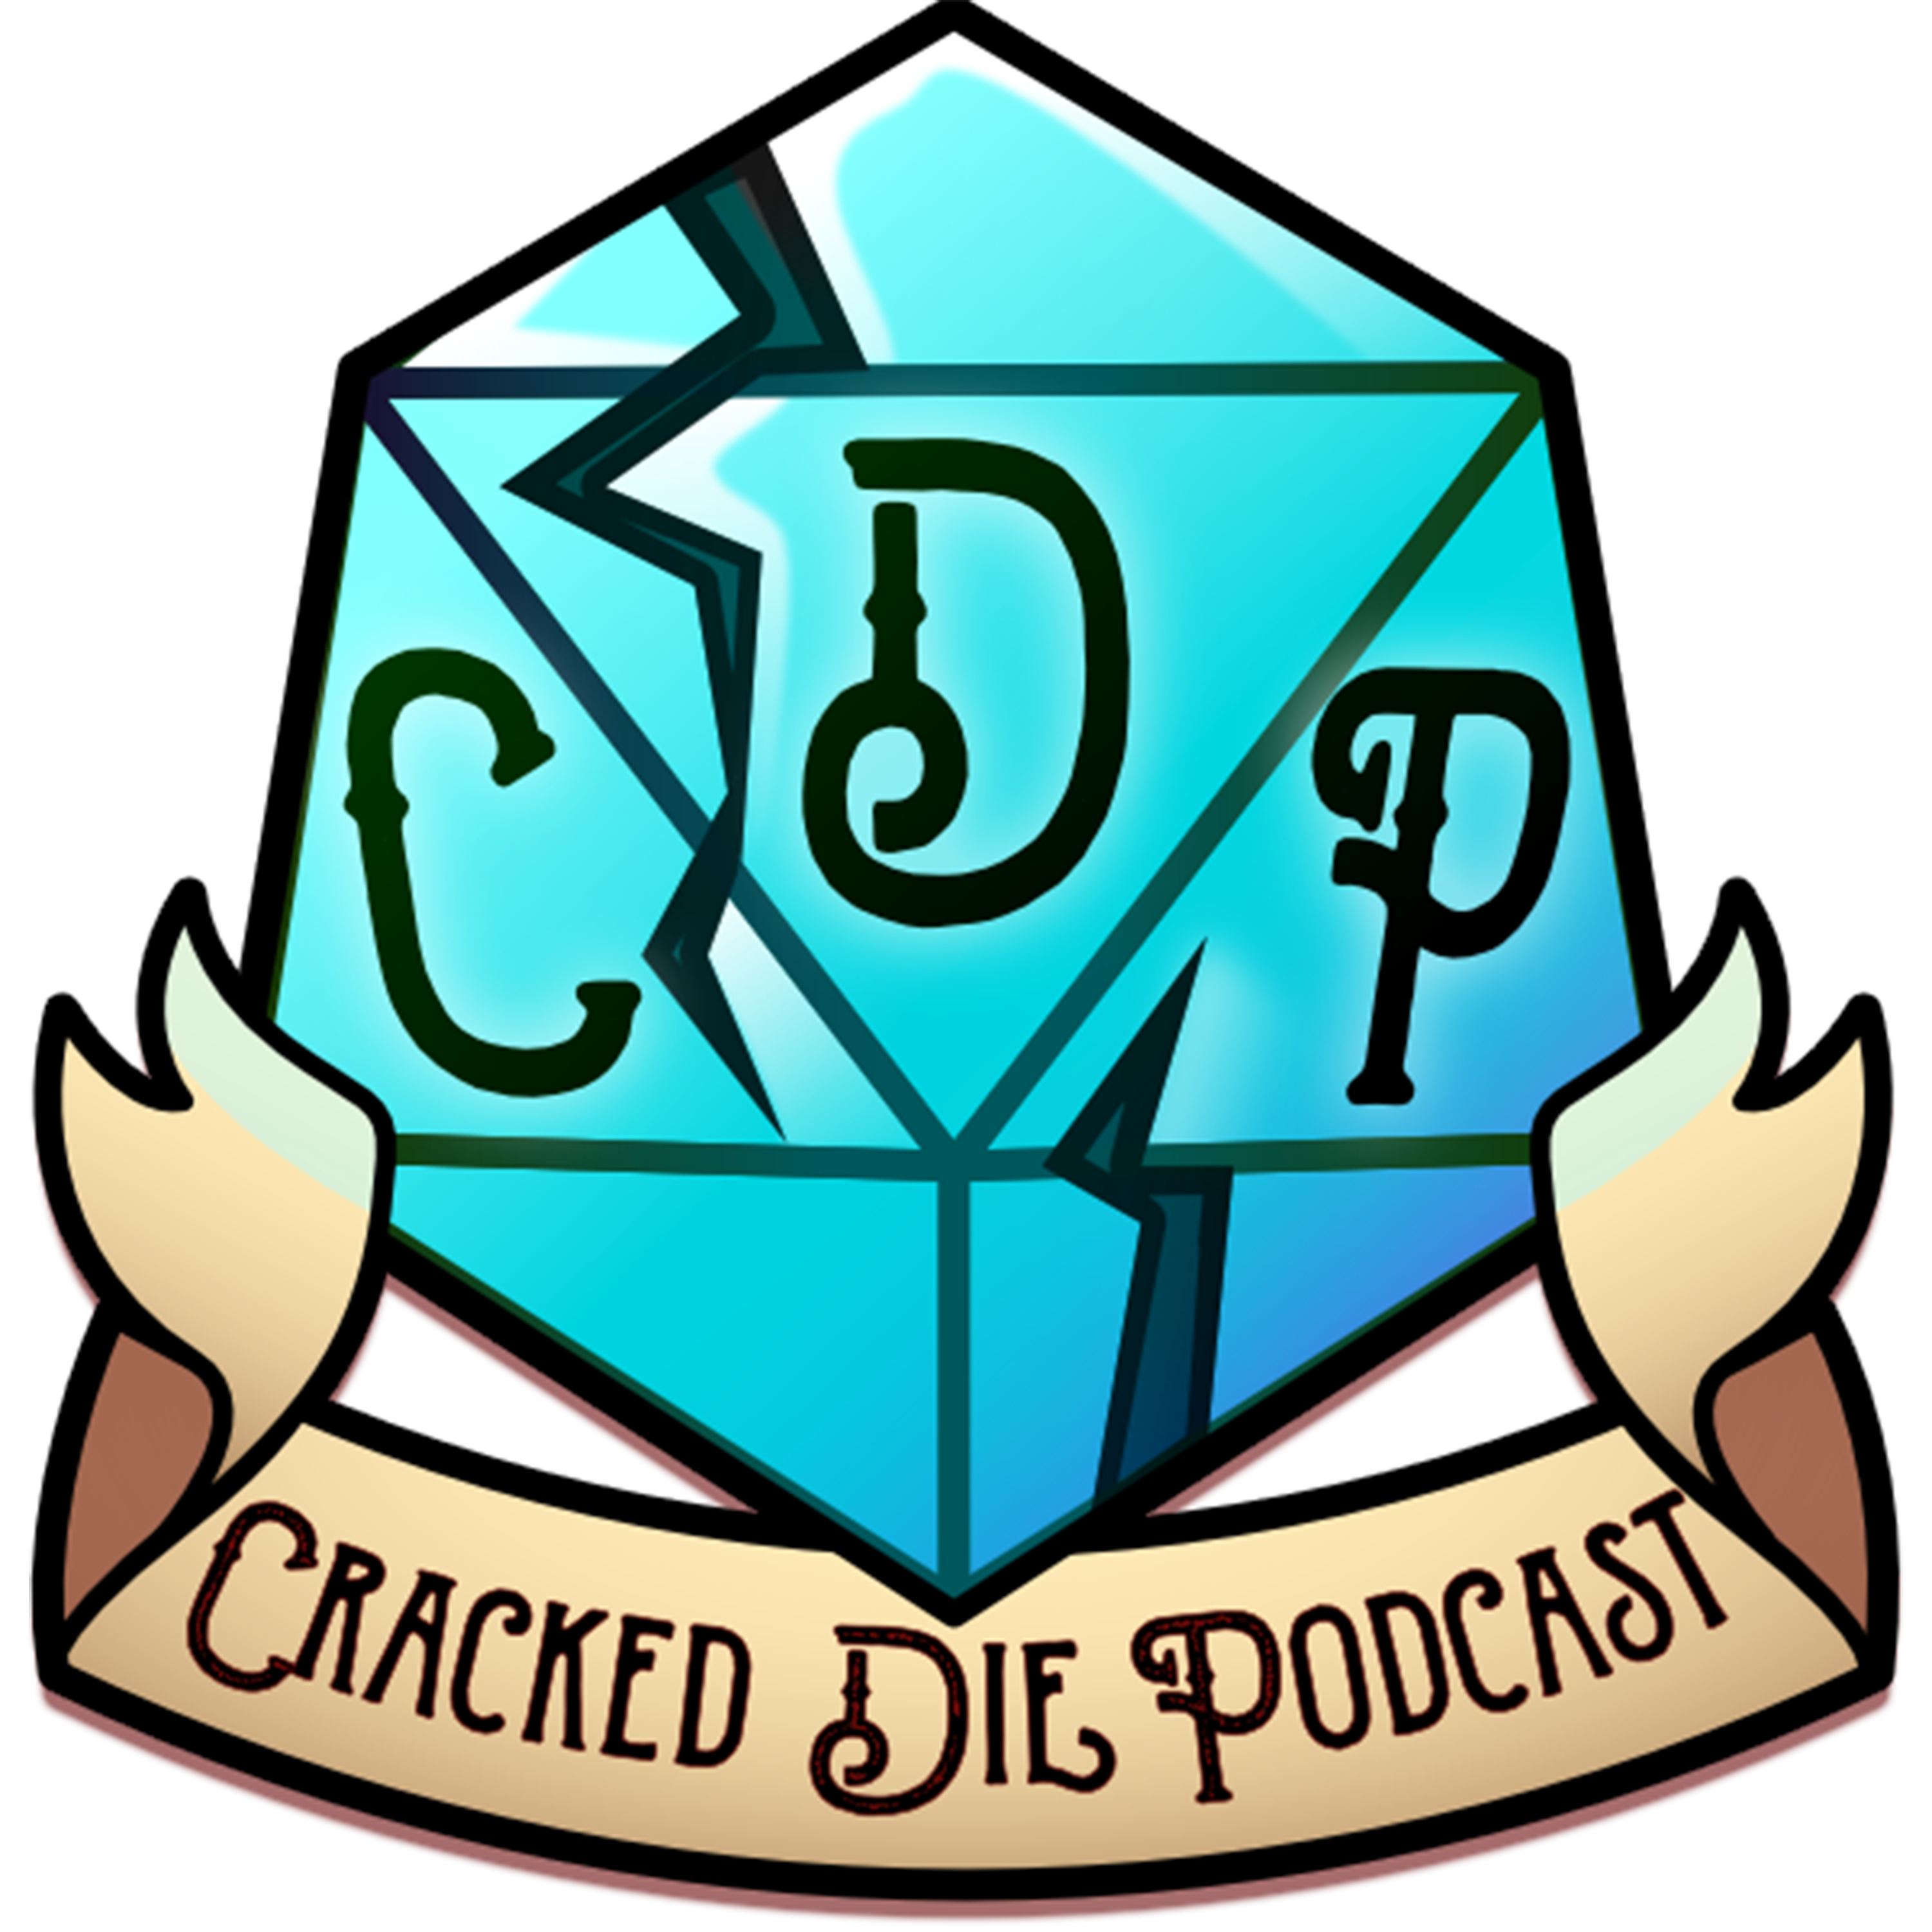 The Cracked Die Podcast - Episode 172 - Shot In The Dark